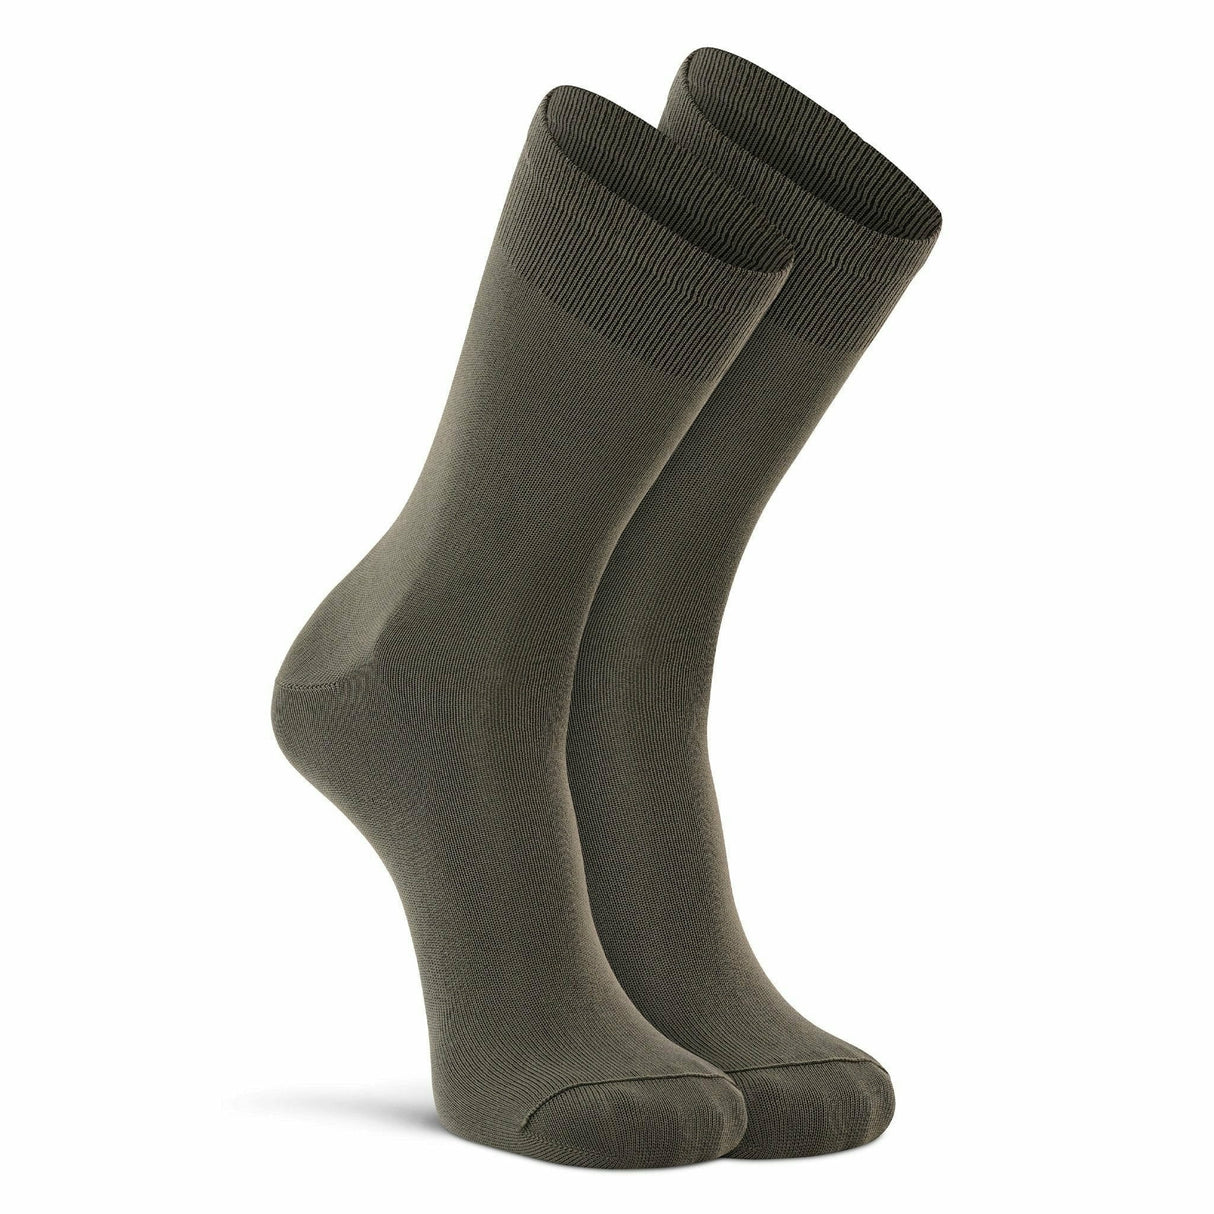 Fox River Wick Dry Alturas Liner Socks  -  Medium / Olive